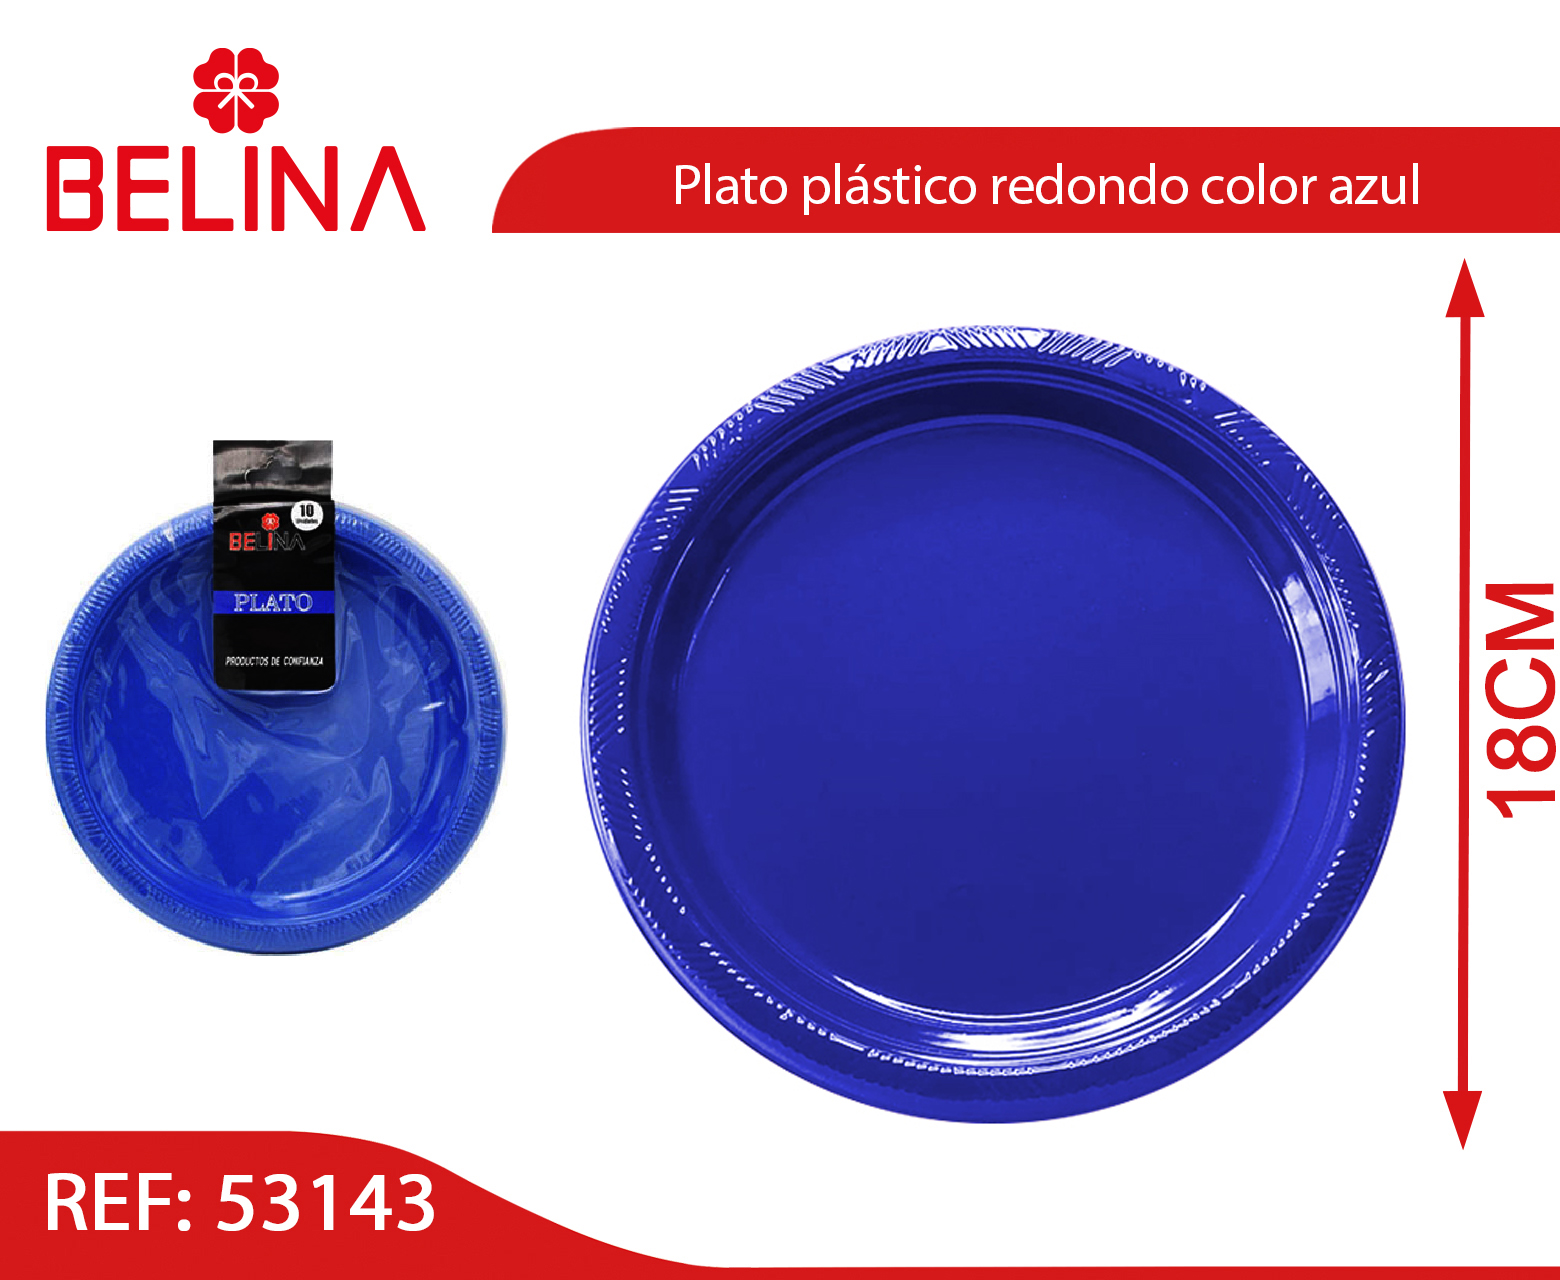 Platos Blancos 22.5cm 10pcs - Belina Cotillón